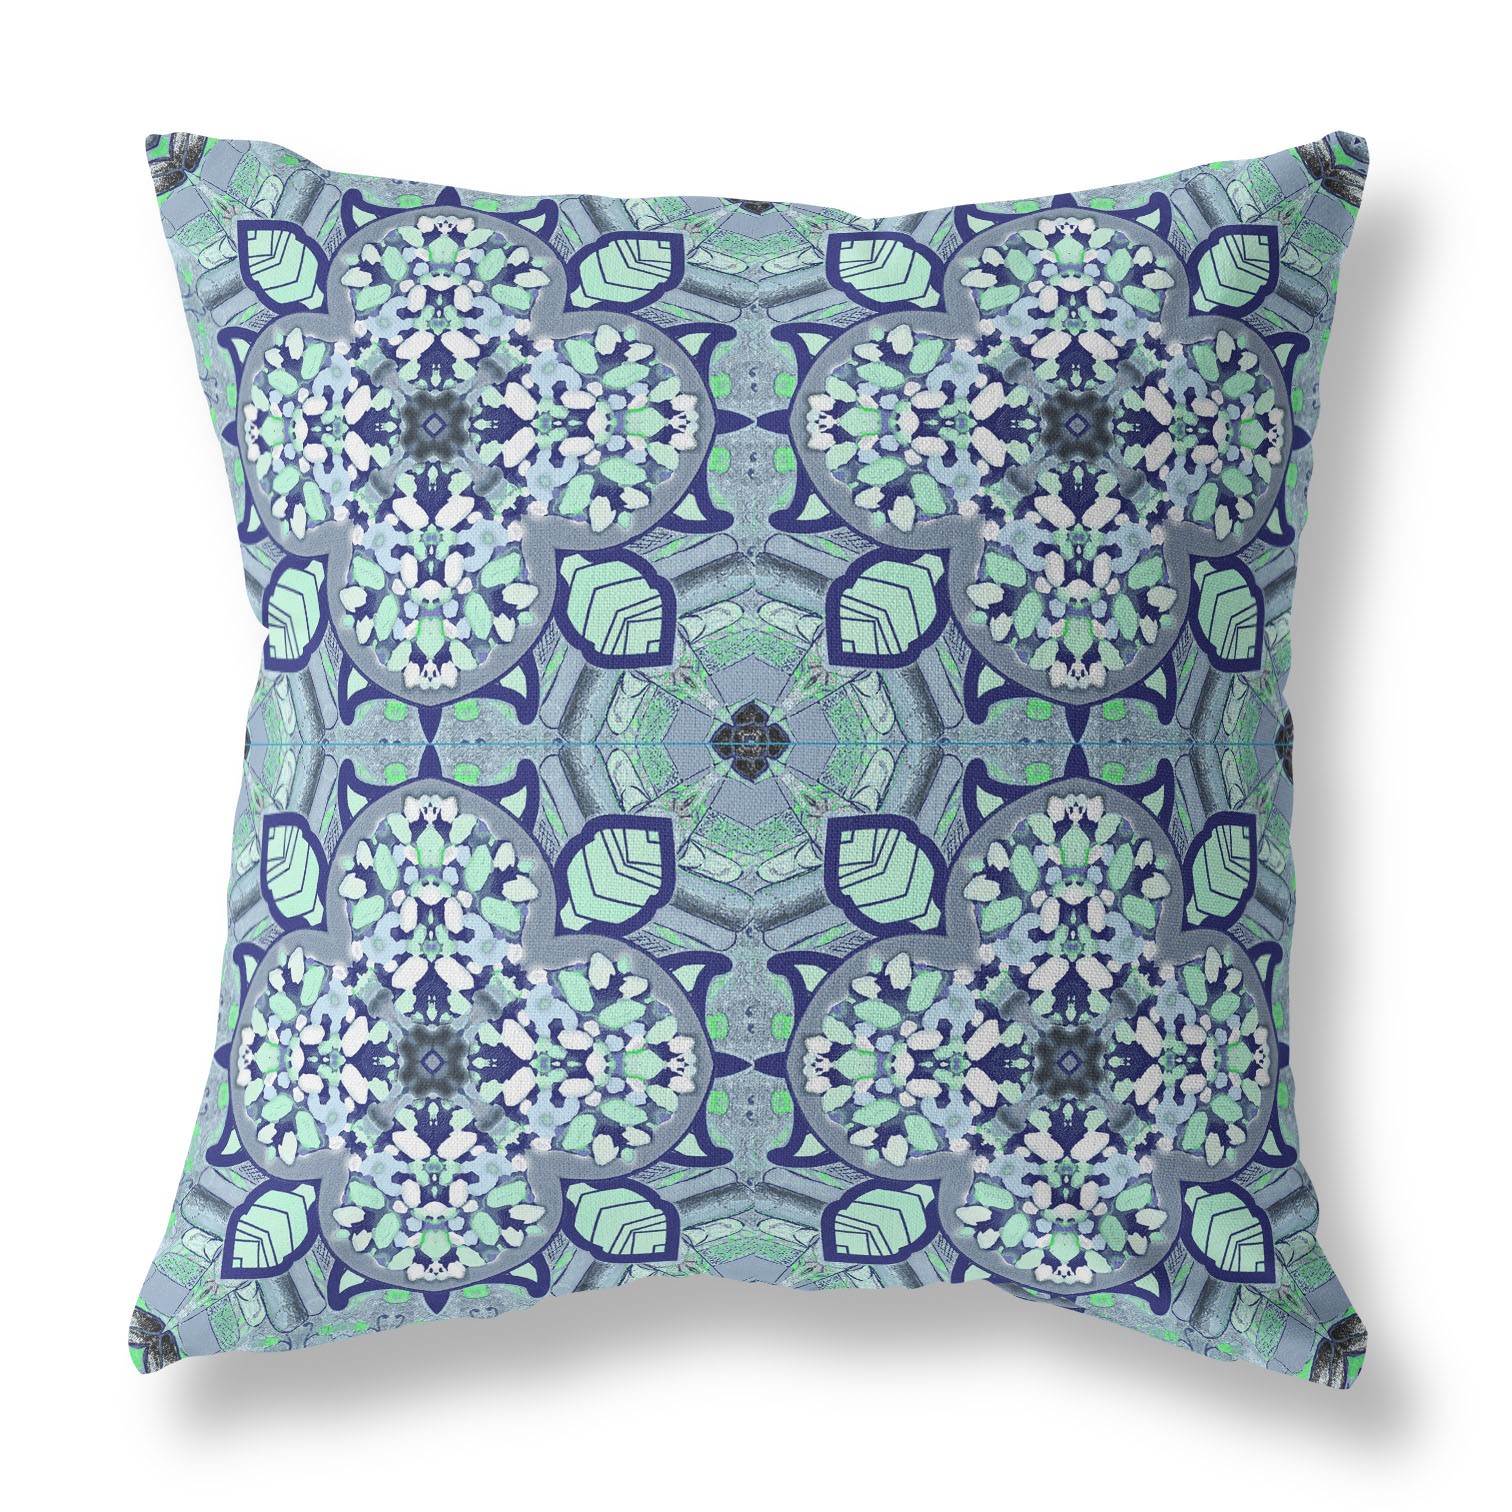 18" X 18" Aqua Zippered Geometric Indoor Outdoor Throw Pillow Cover & Insert-417709-1